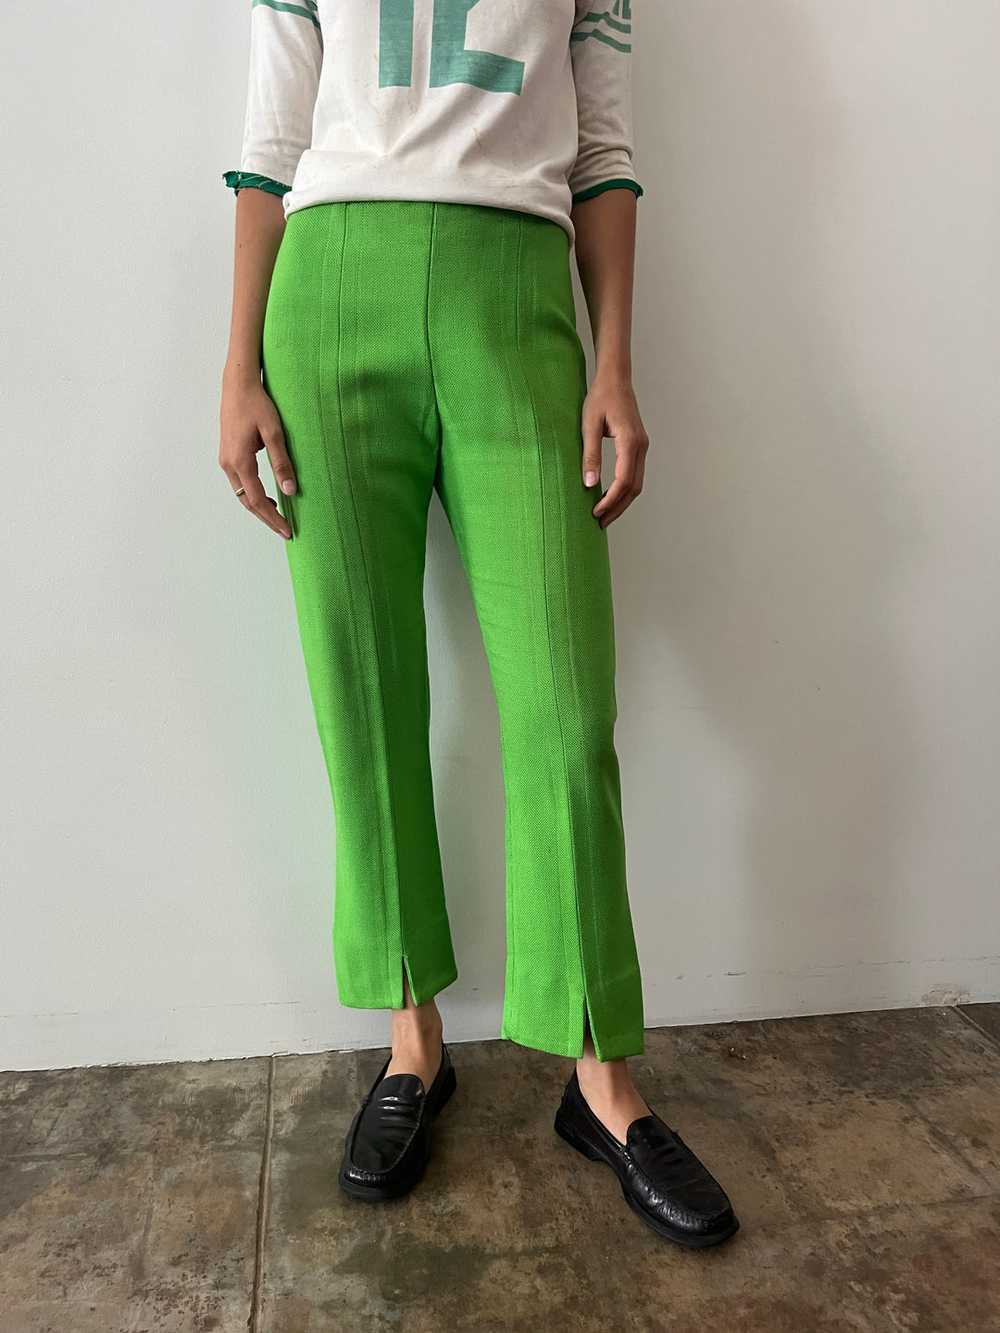 60s/70s Lime Green Woven Linen Pants - image 2